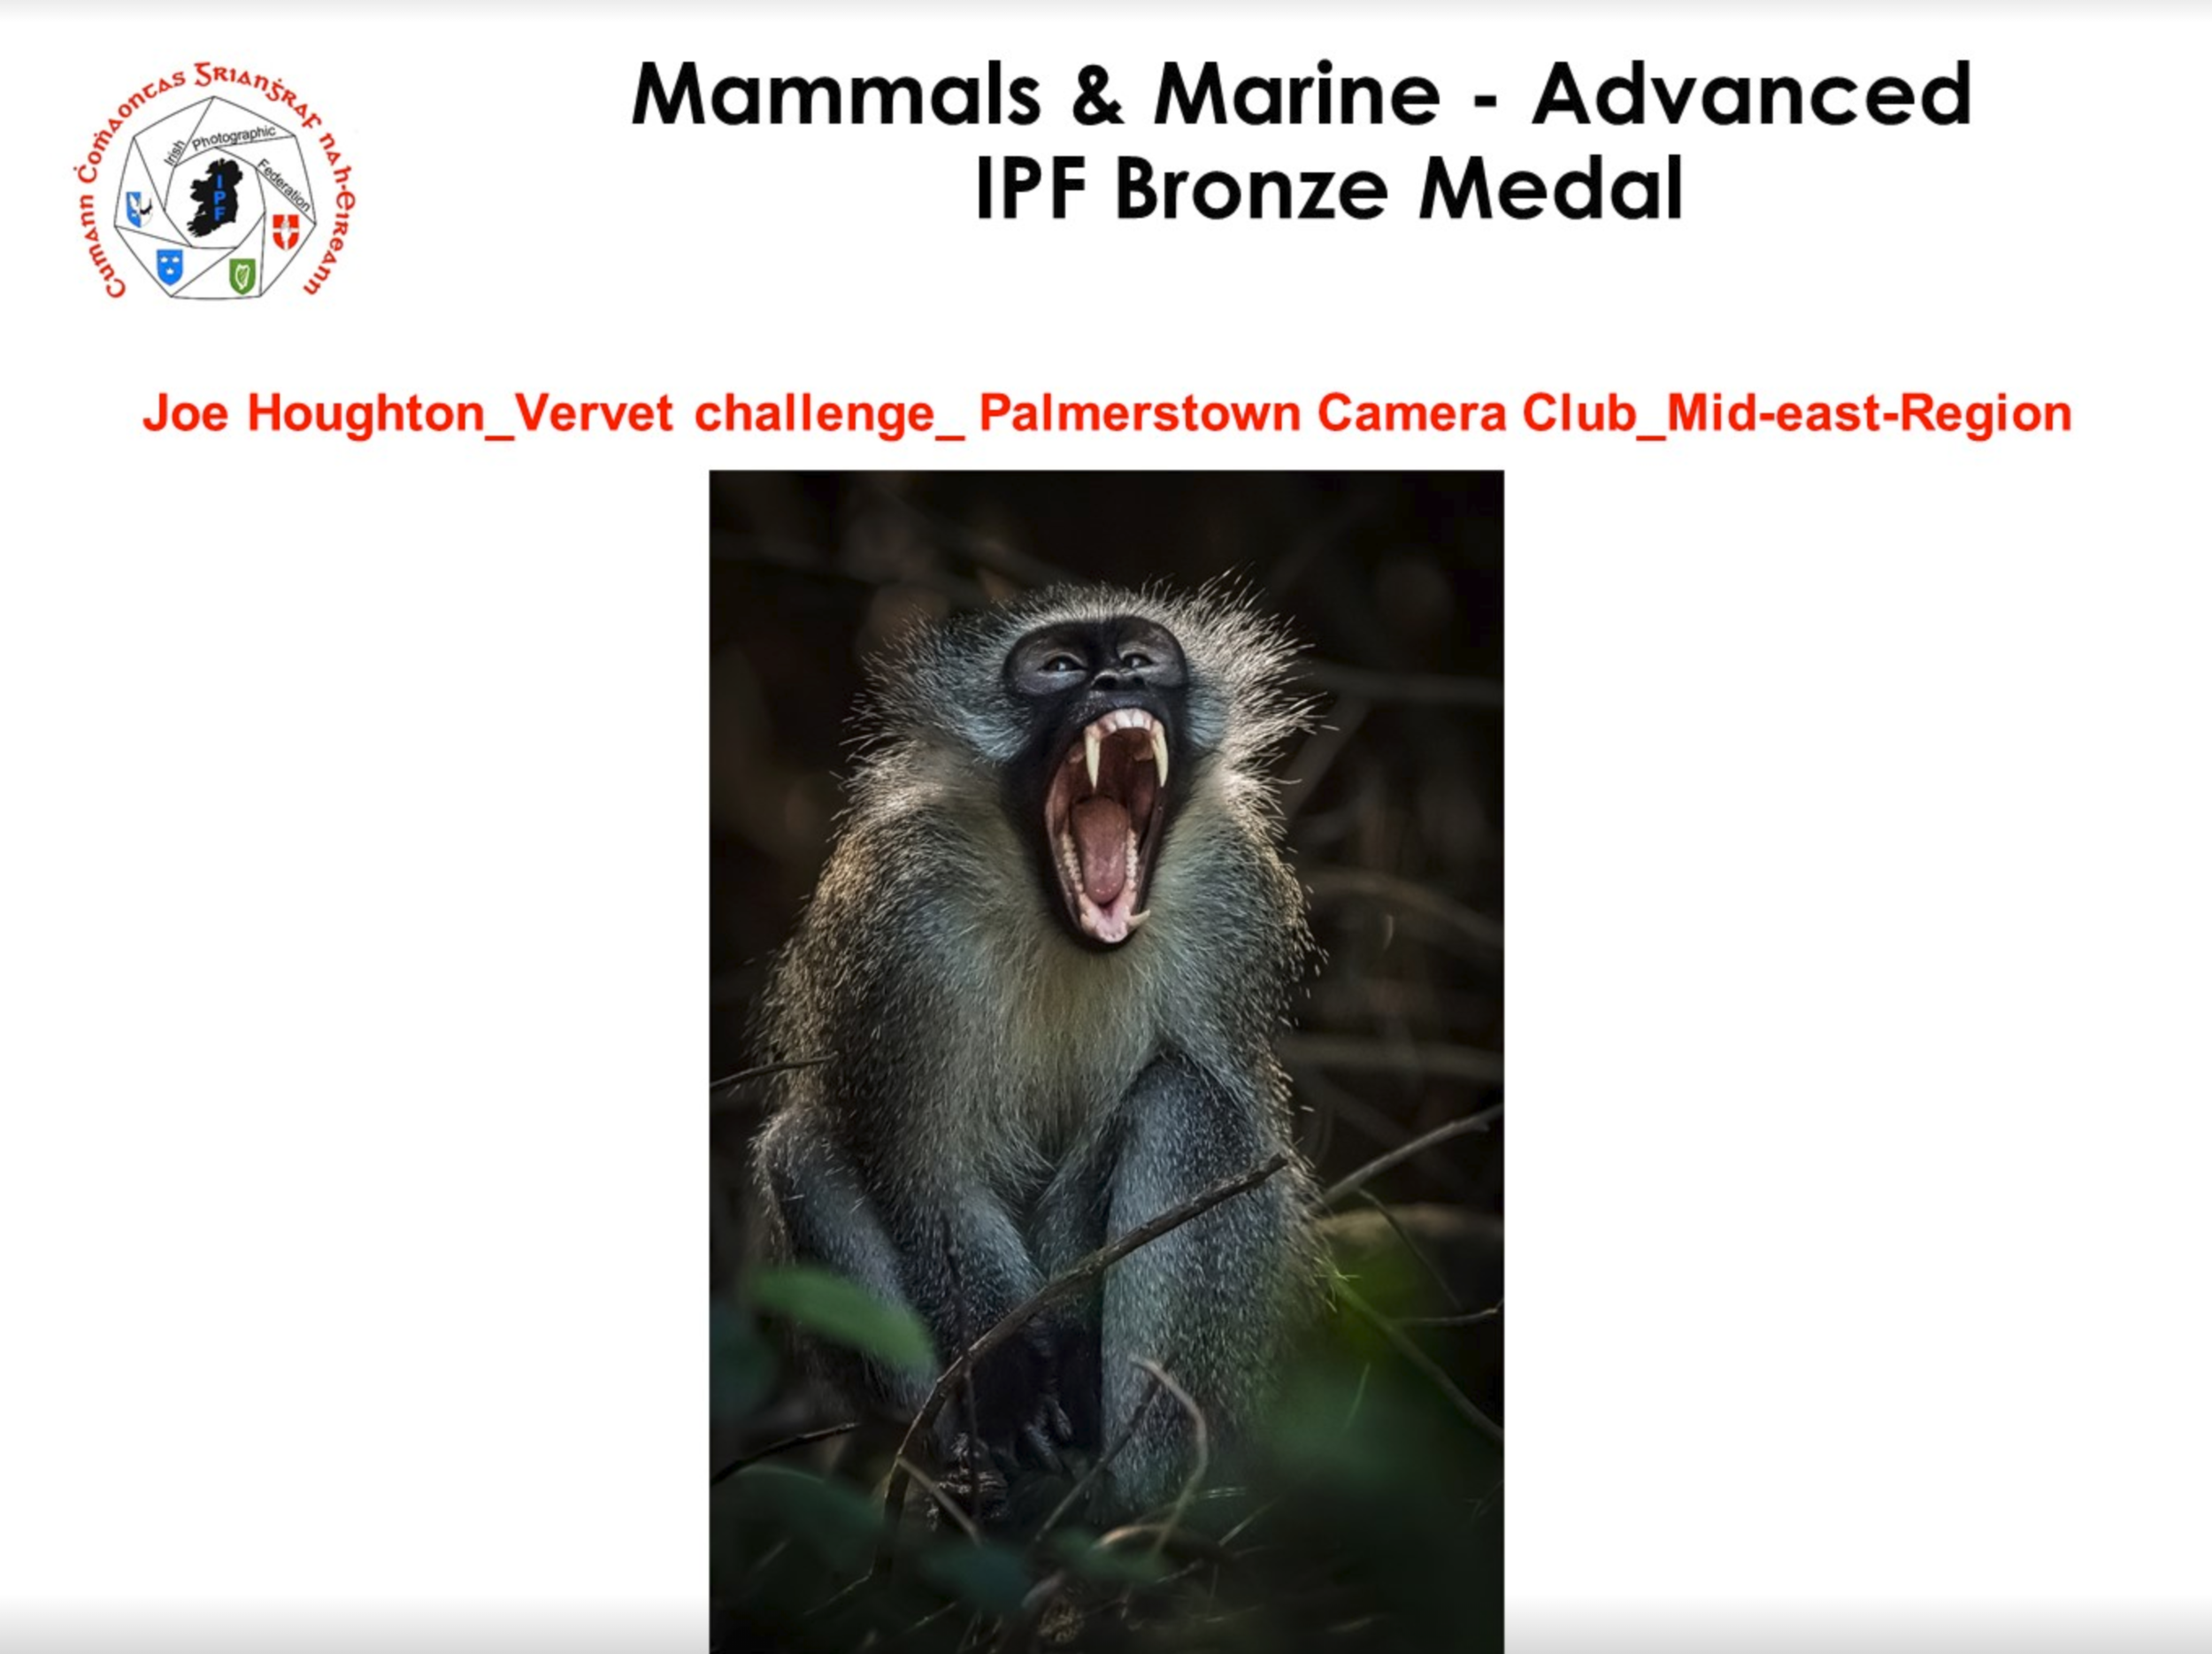 Vervet Challenge - Bronze medal - 2020 IPF NPOTY Mammals & Marine.png